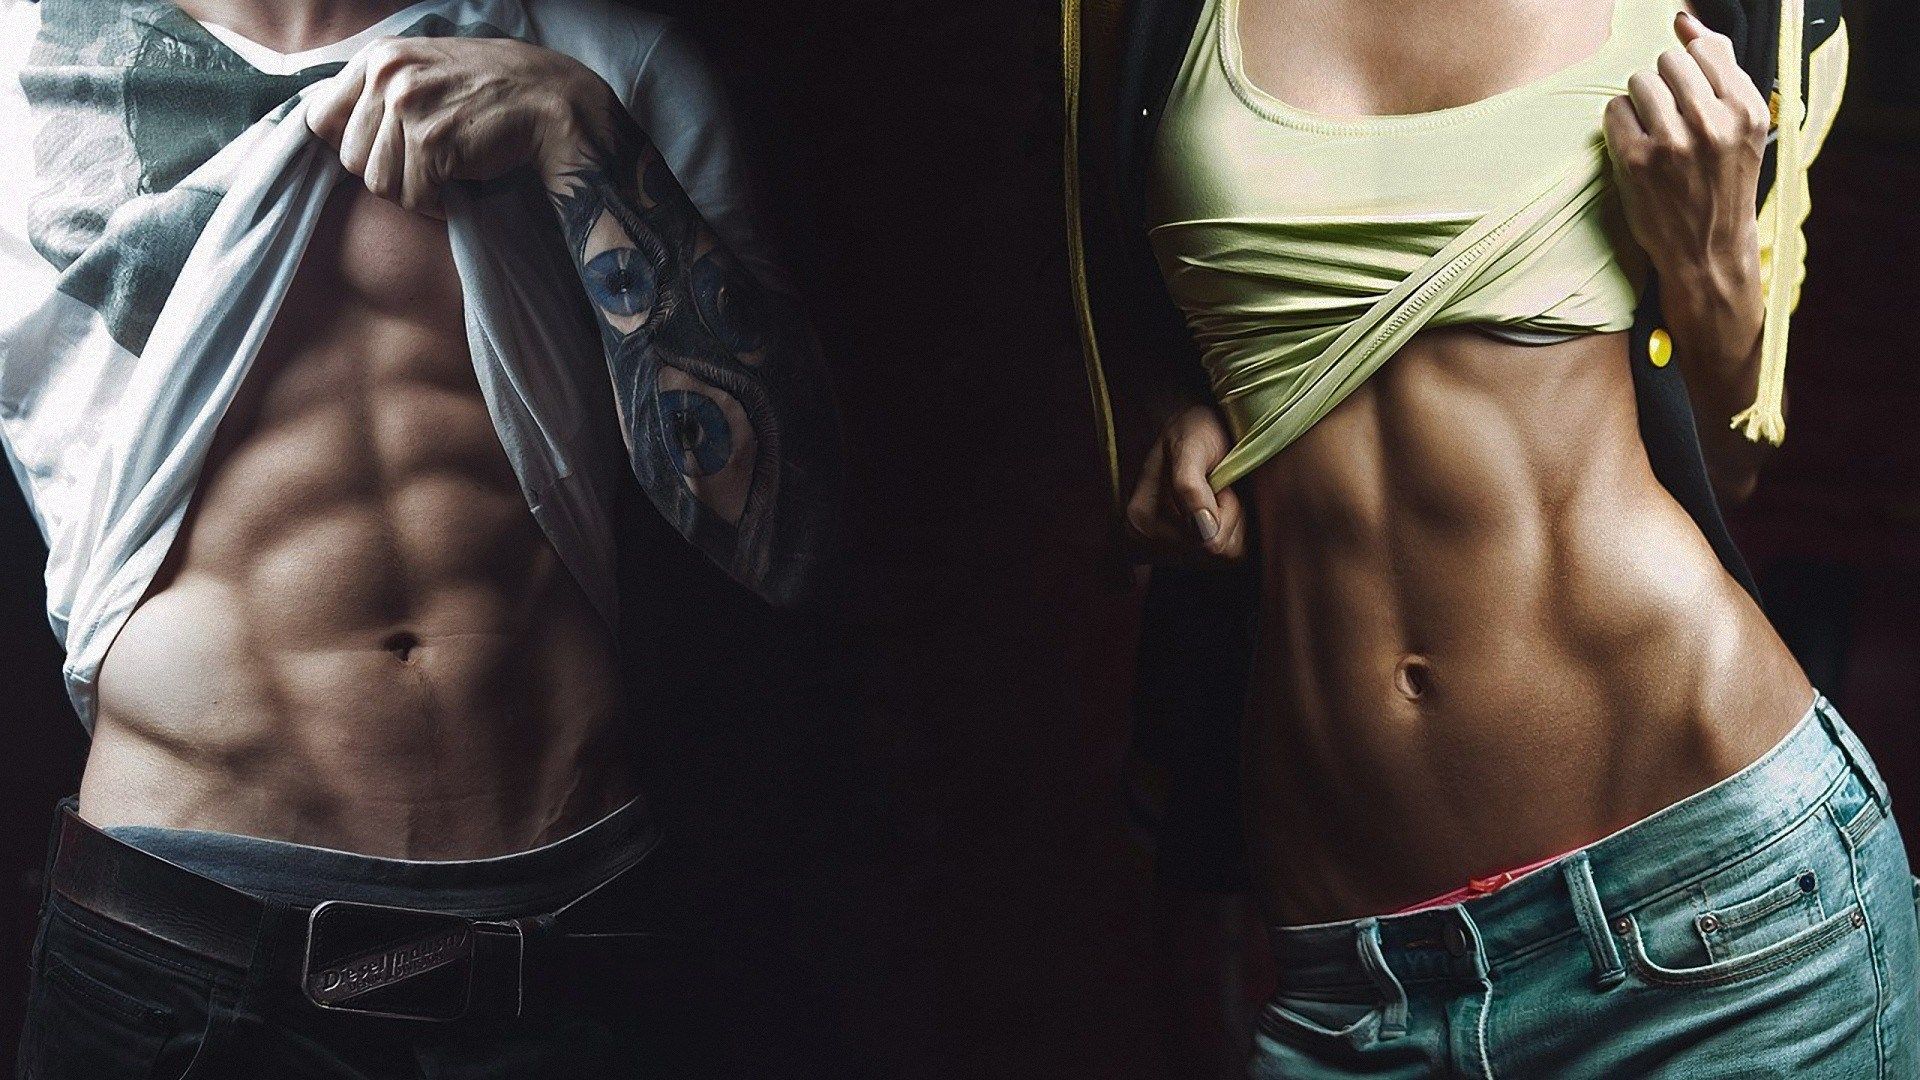 HD wallpaper, Abs, Girl, Fitness, Boy, Muscle